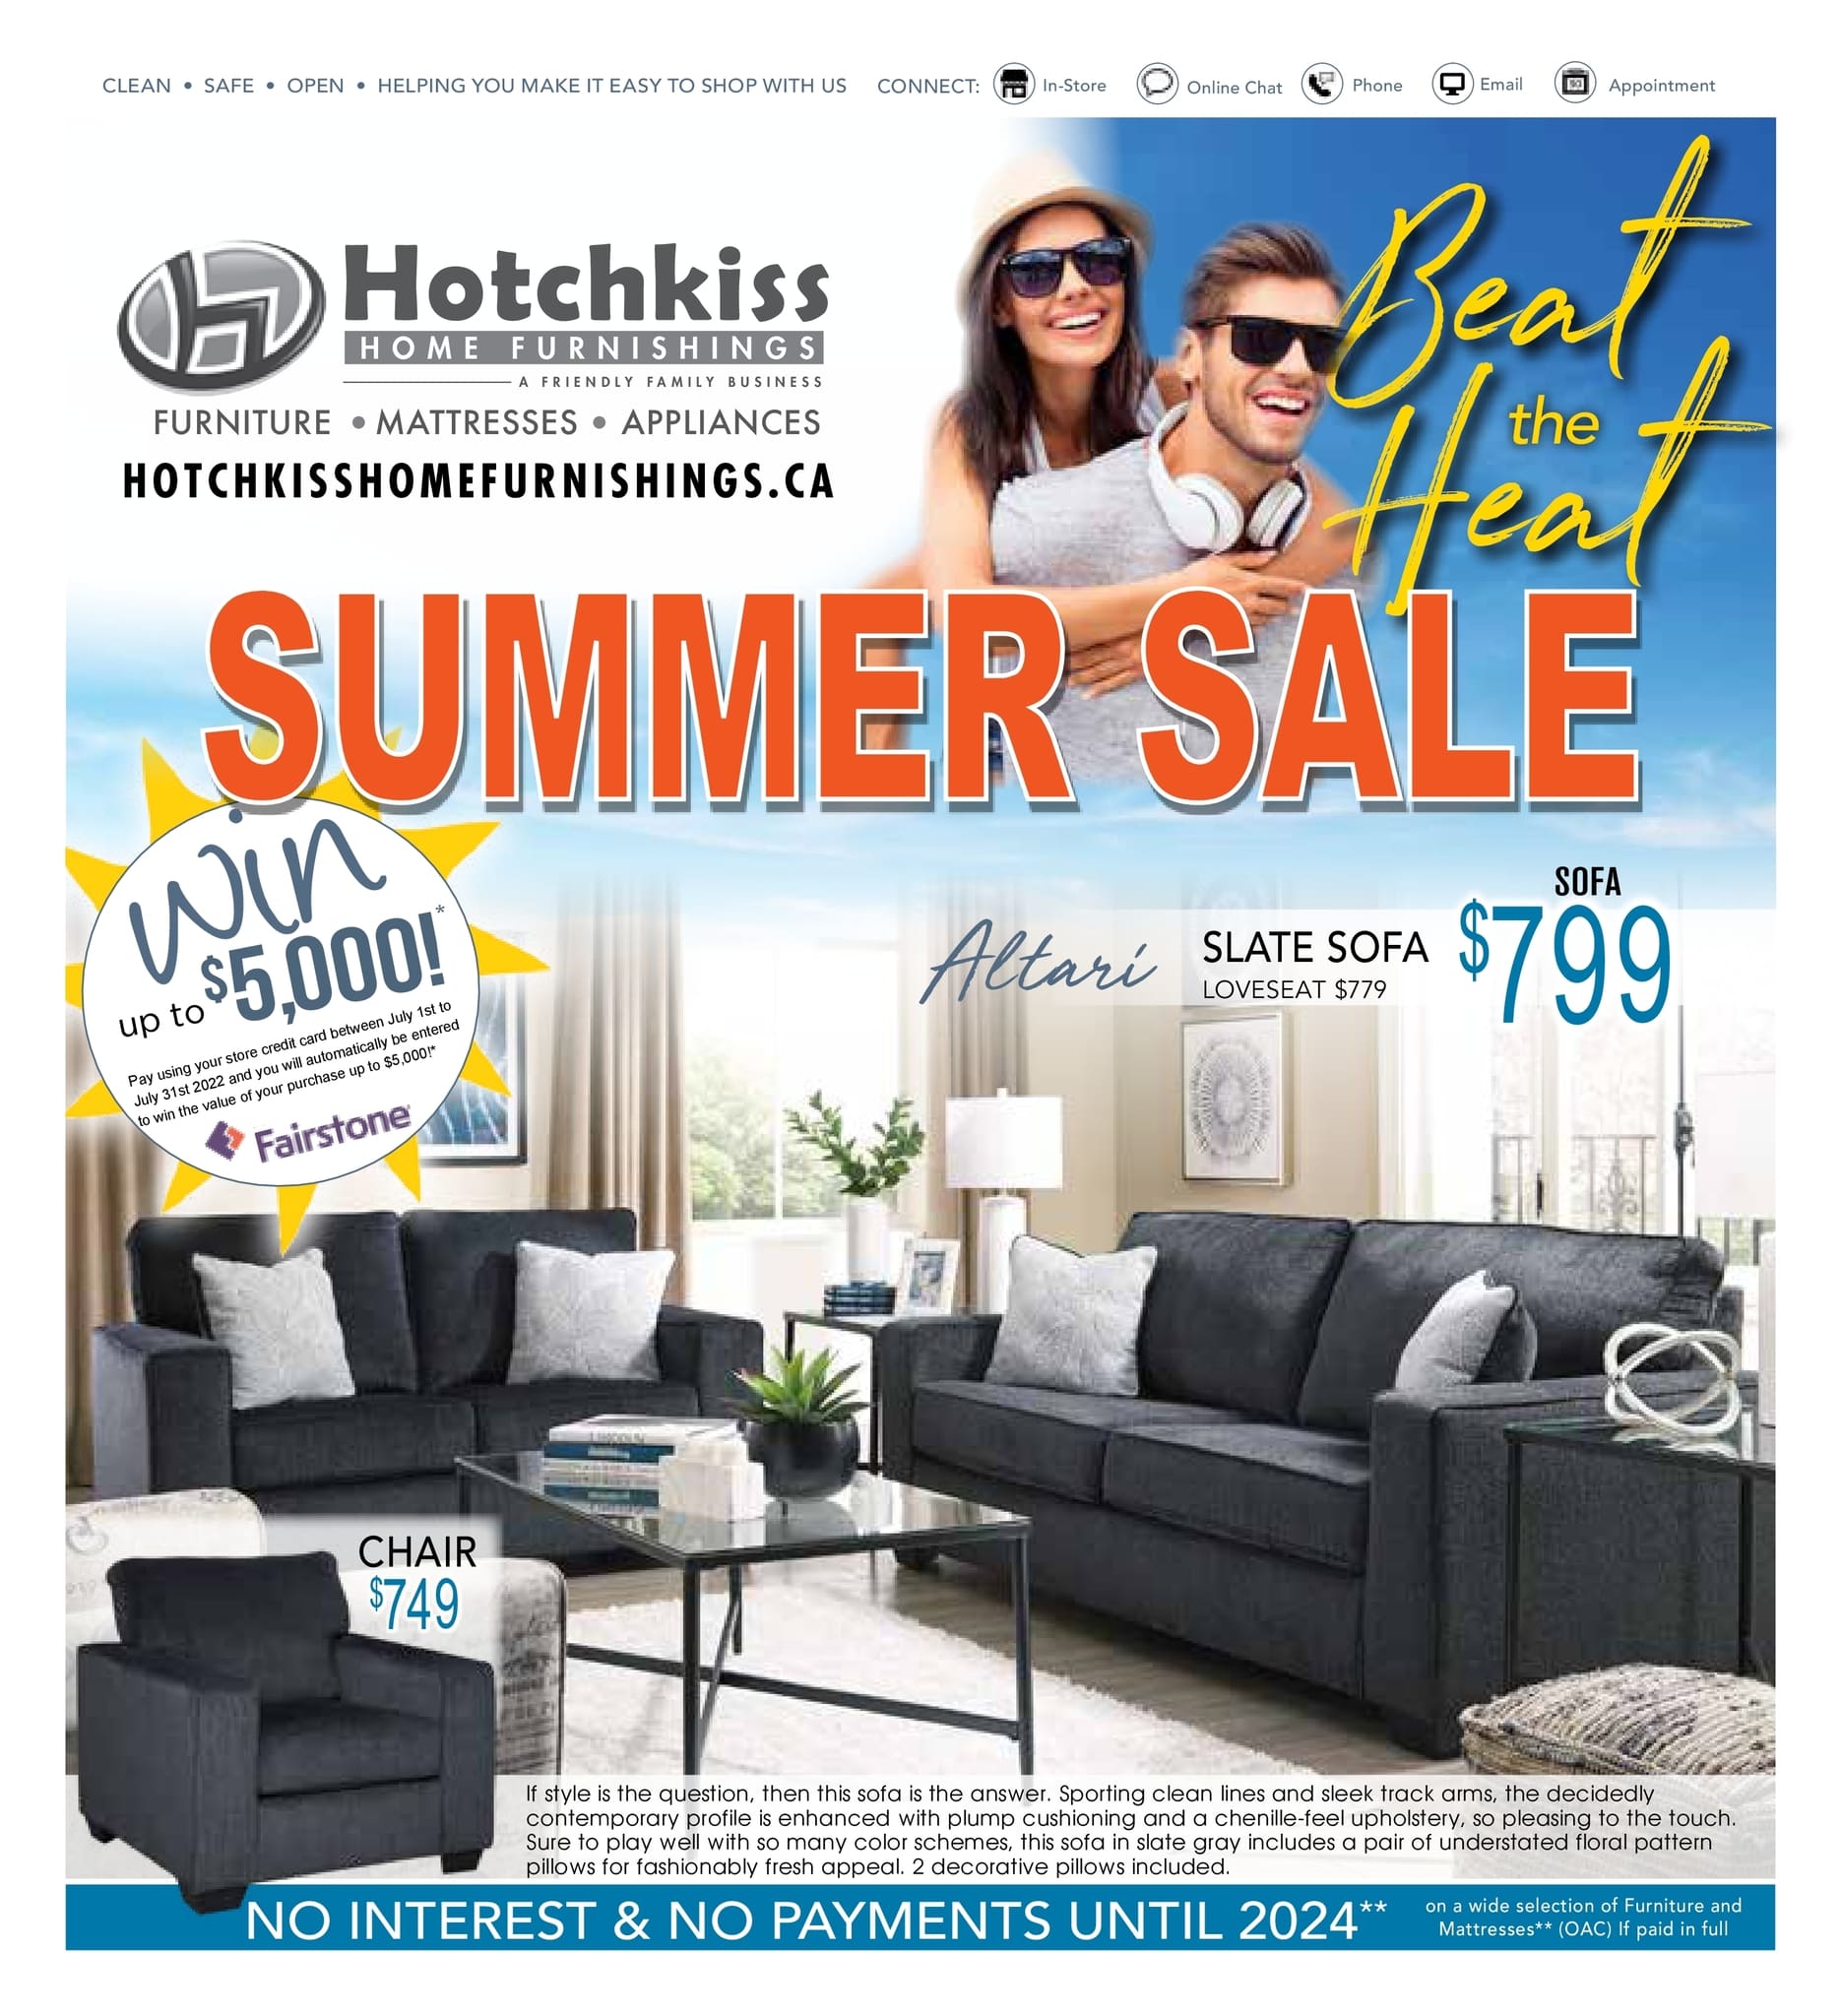 Hotchkiss Home Furnishings - Summer Sale